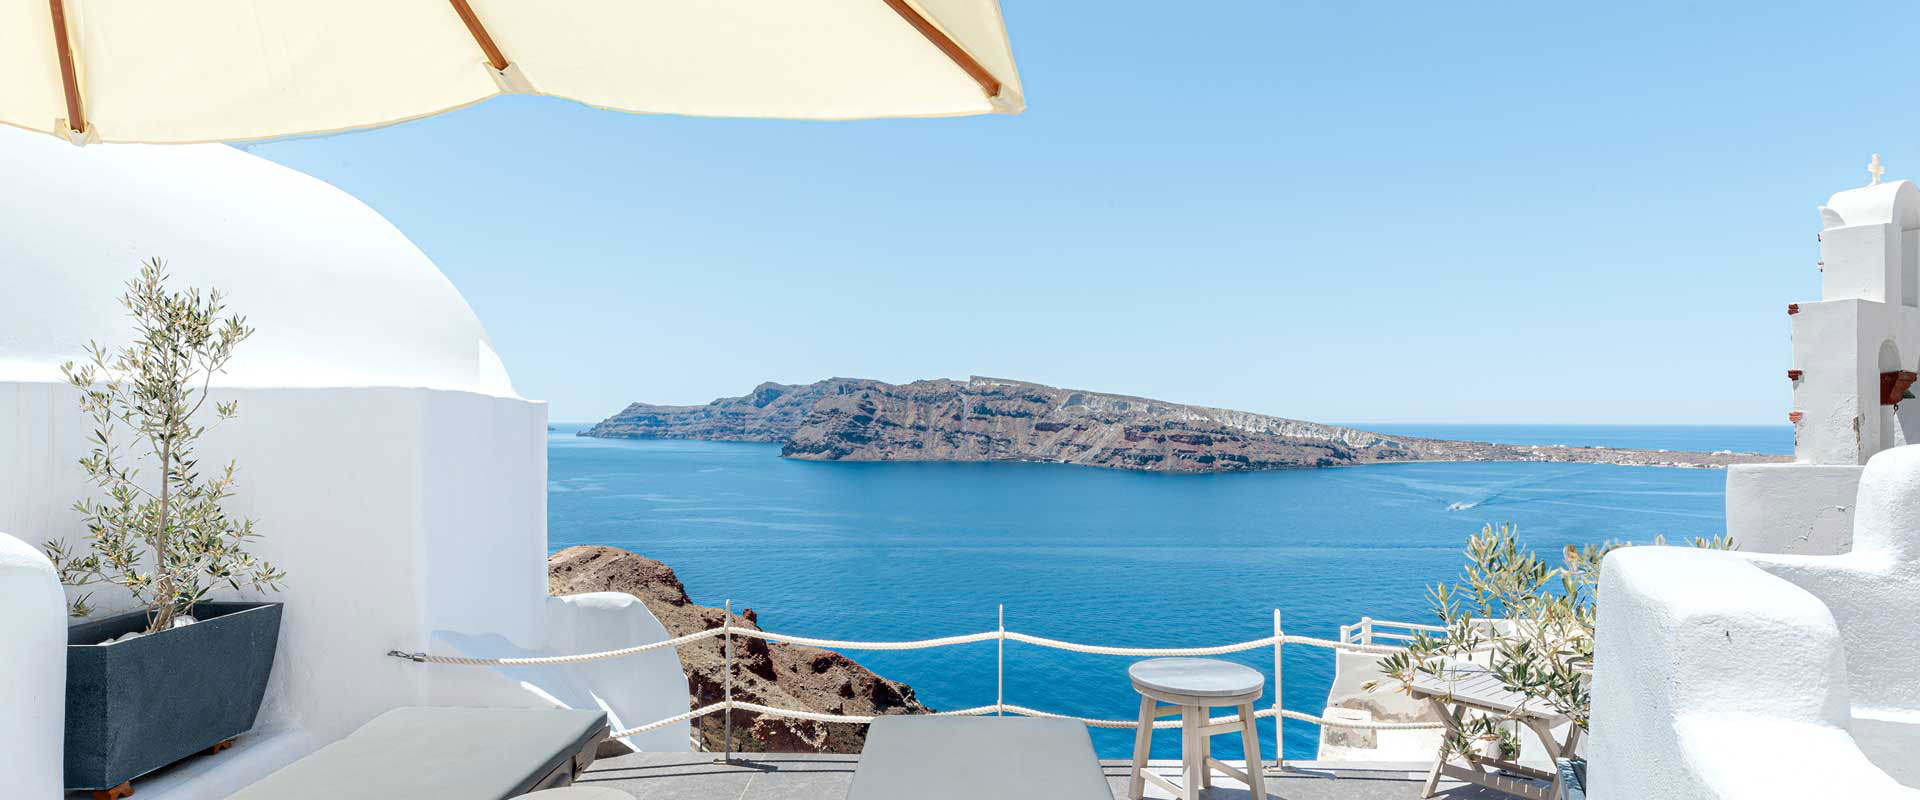 My Santorini Hotels